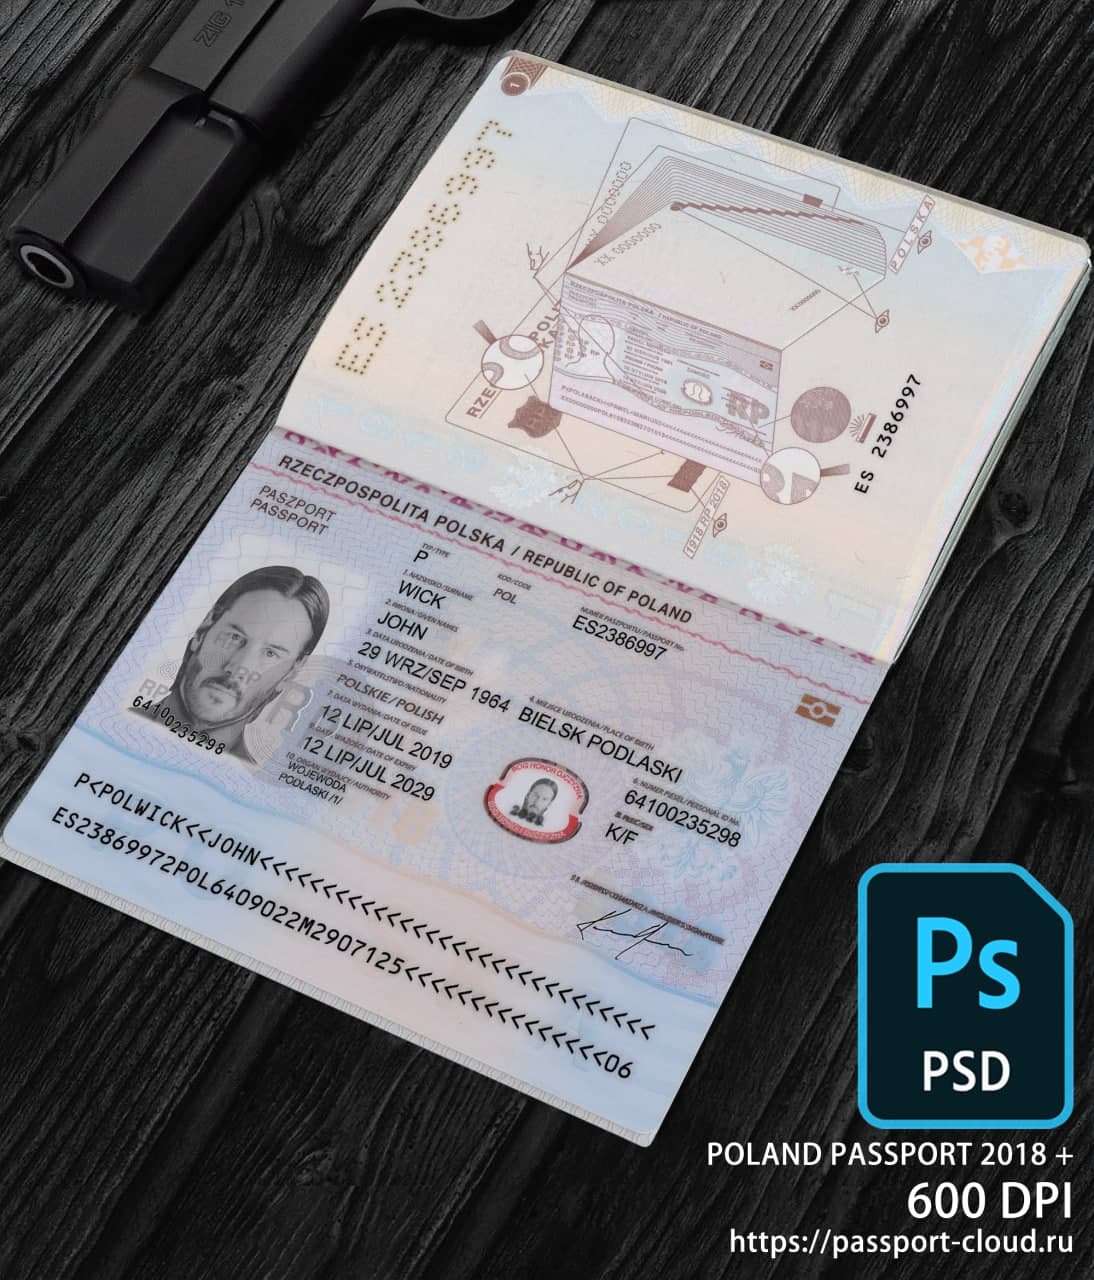 Do You Need A Polish Passport To Go To Poland